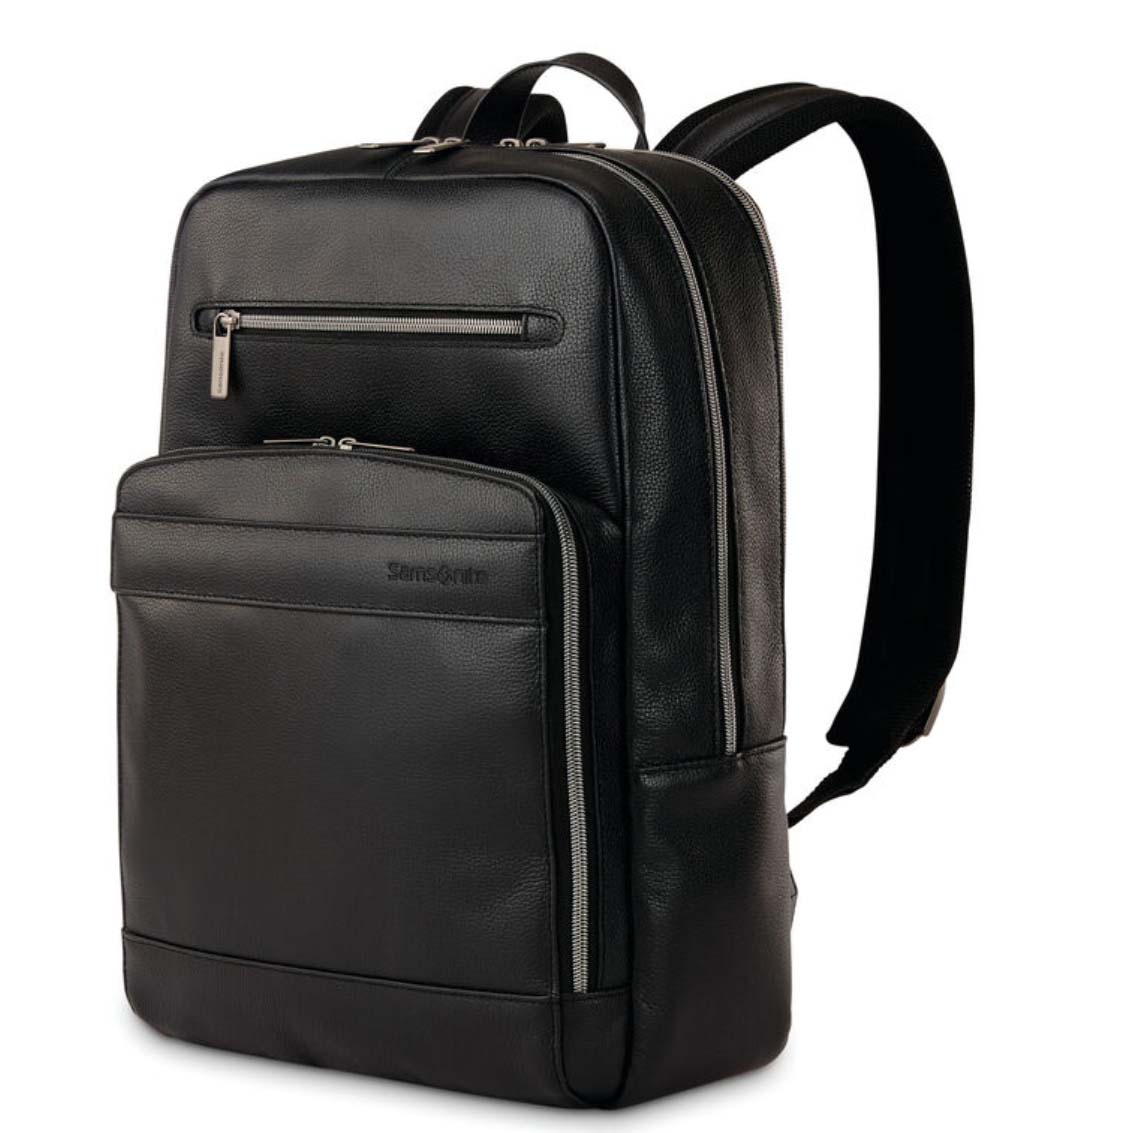 Samsonite Business Slim Leather Backpack in black